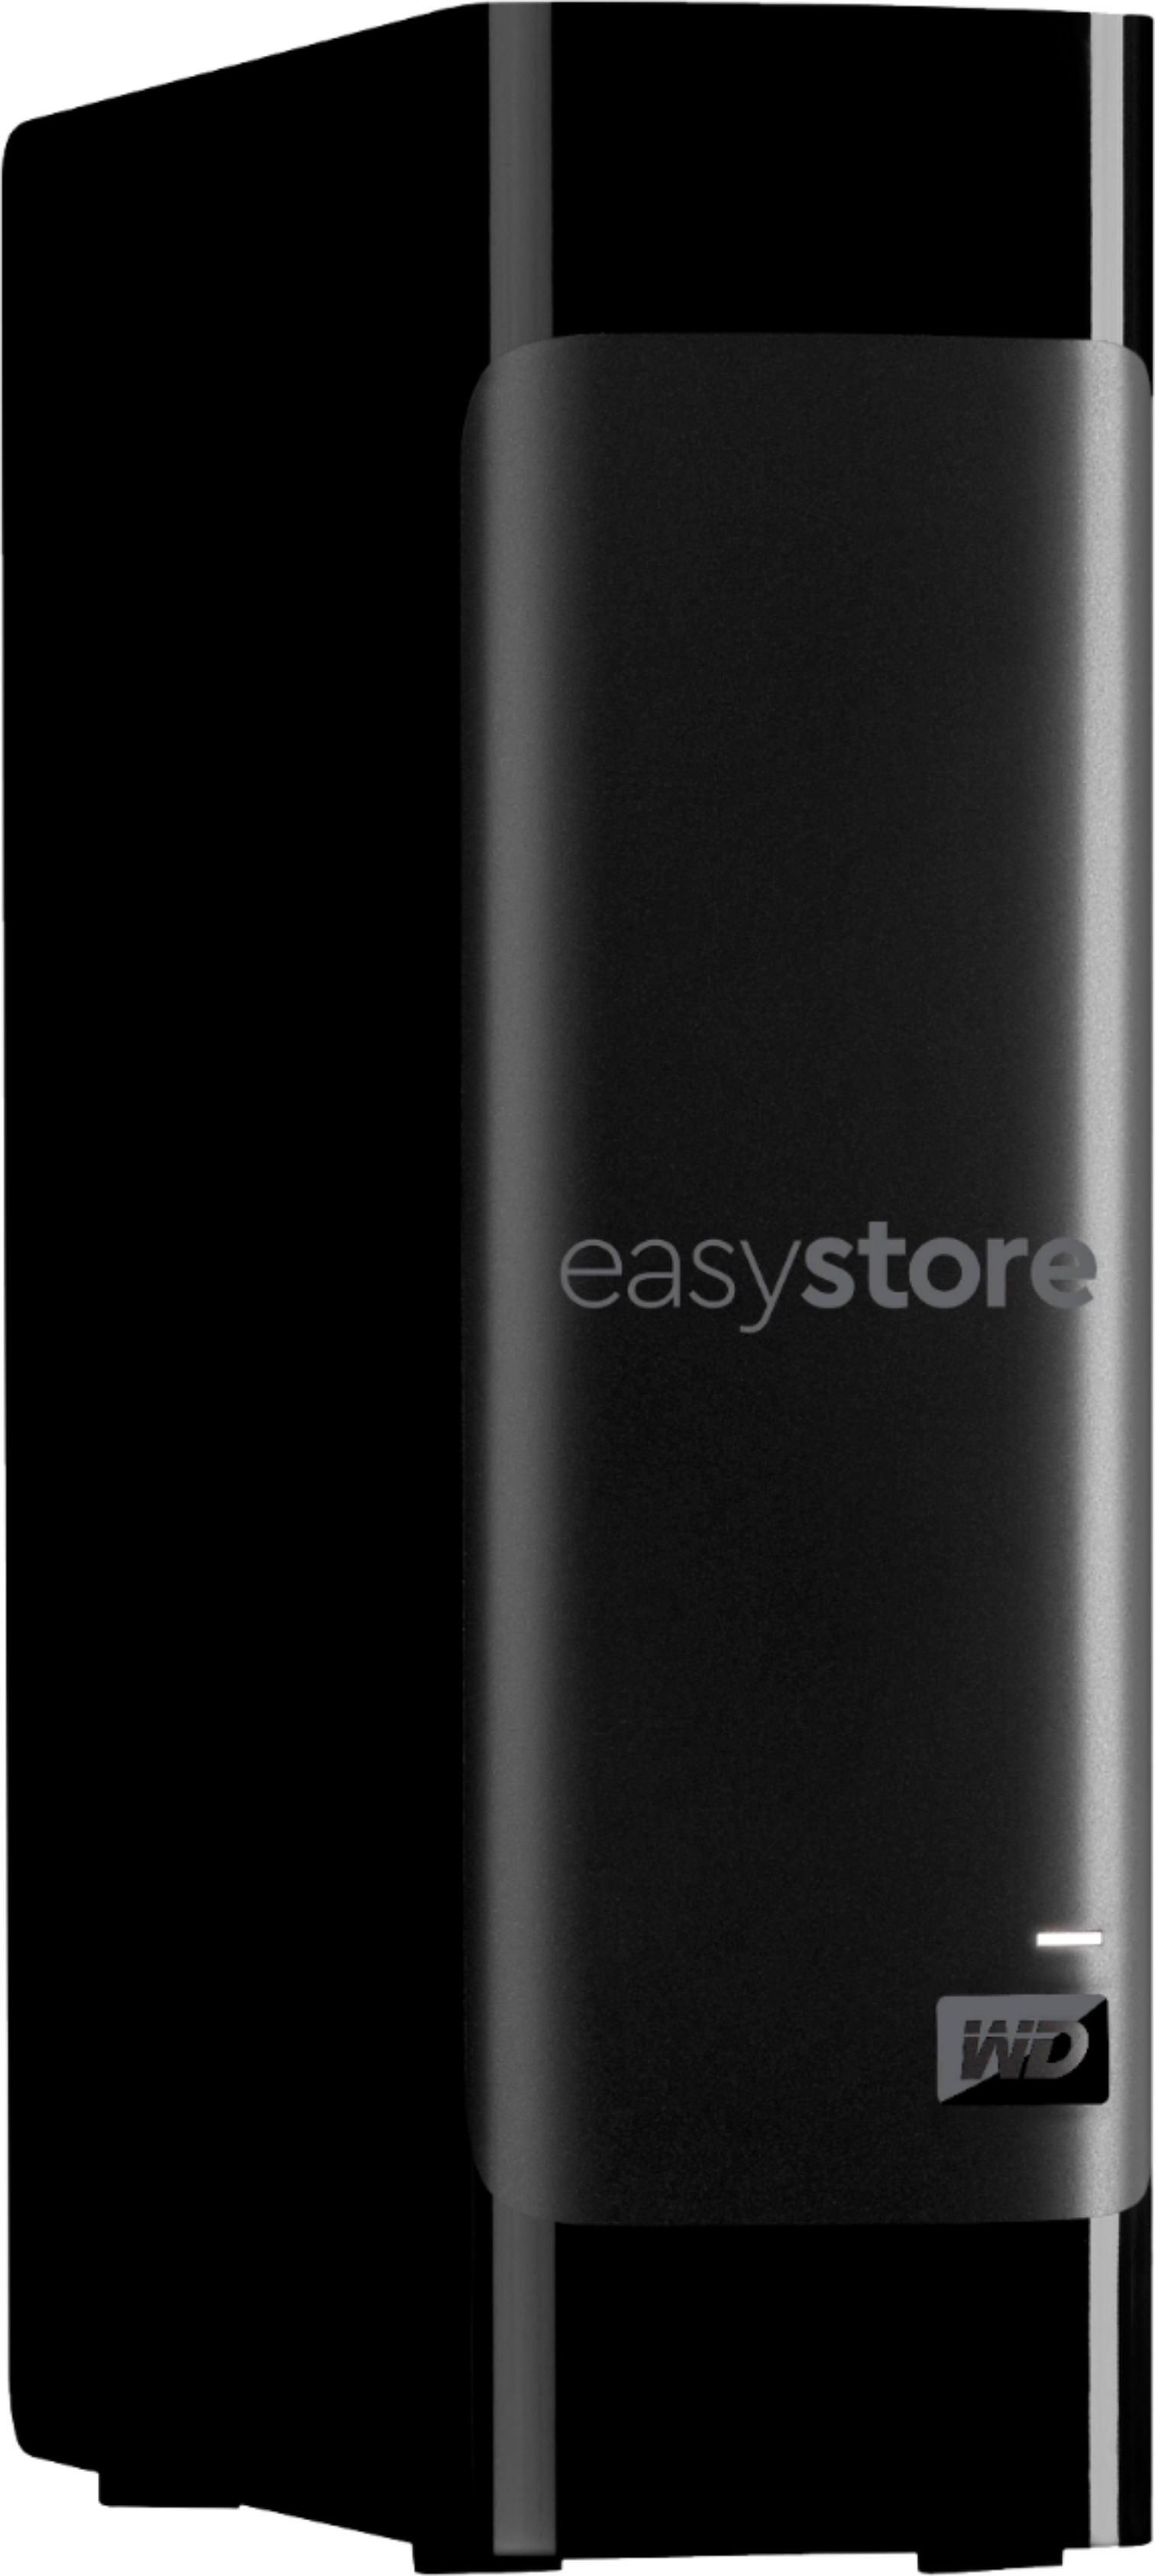 Left View: WD - easystore 14TB External USB 3.0 Hard Drive - Black